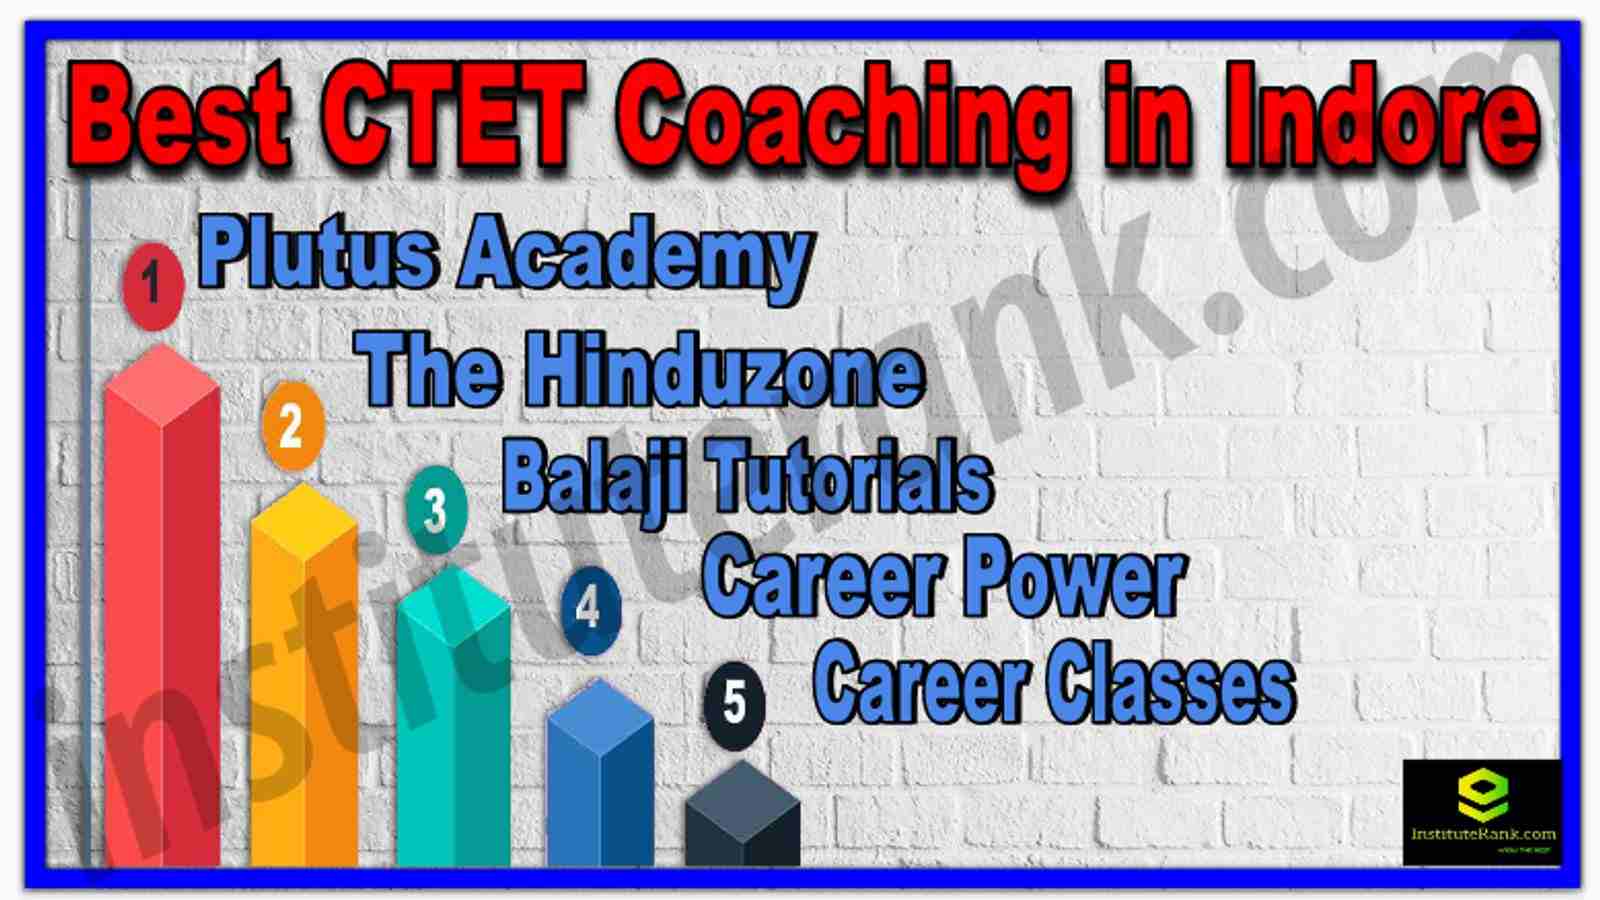 Best CTET Coaching in Indore